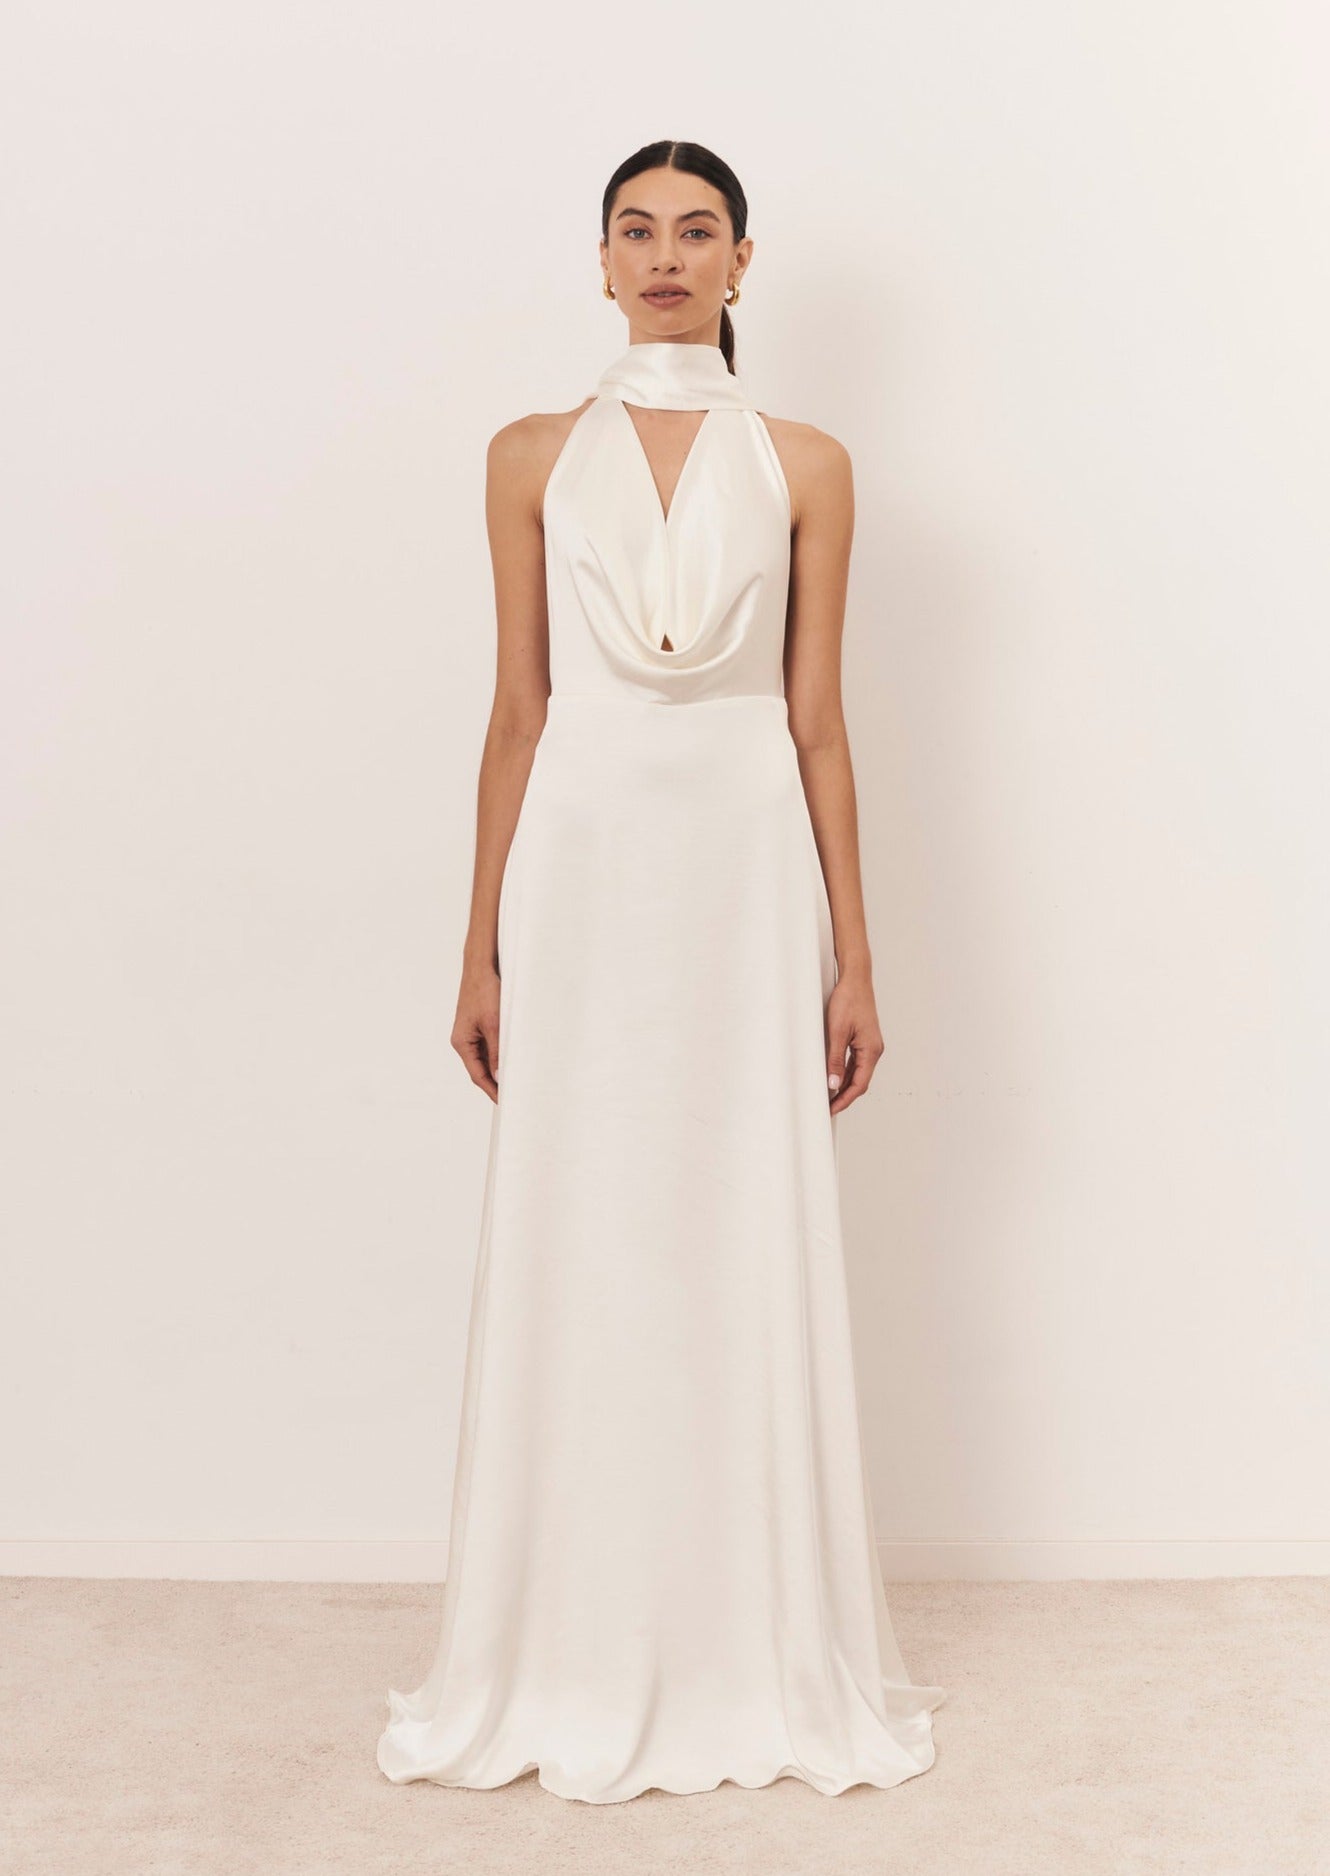 Olympia bridal dress